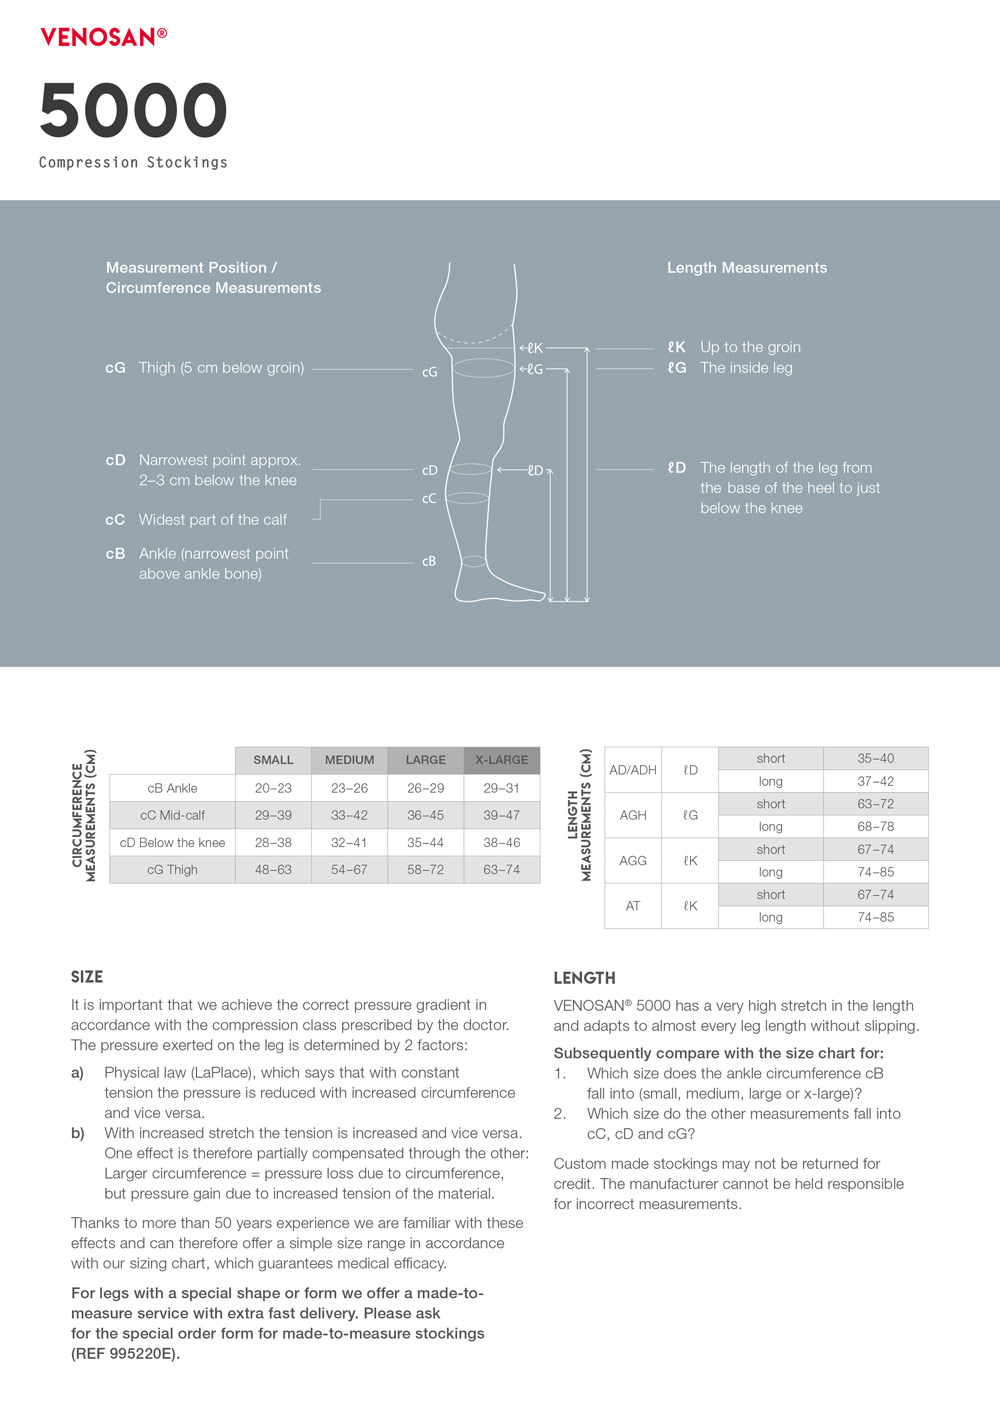 Venosan-5000-series-size-guide-compression-stockings